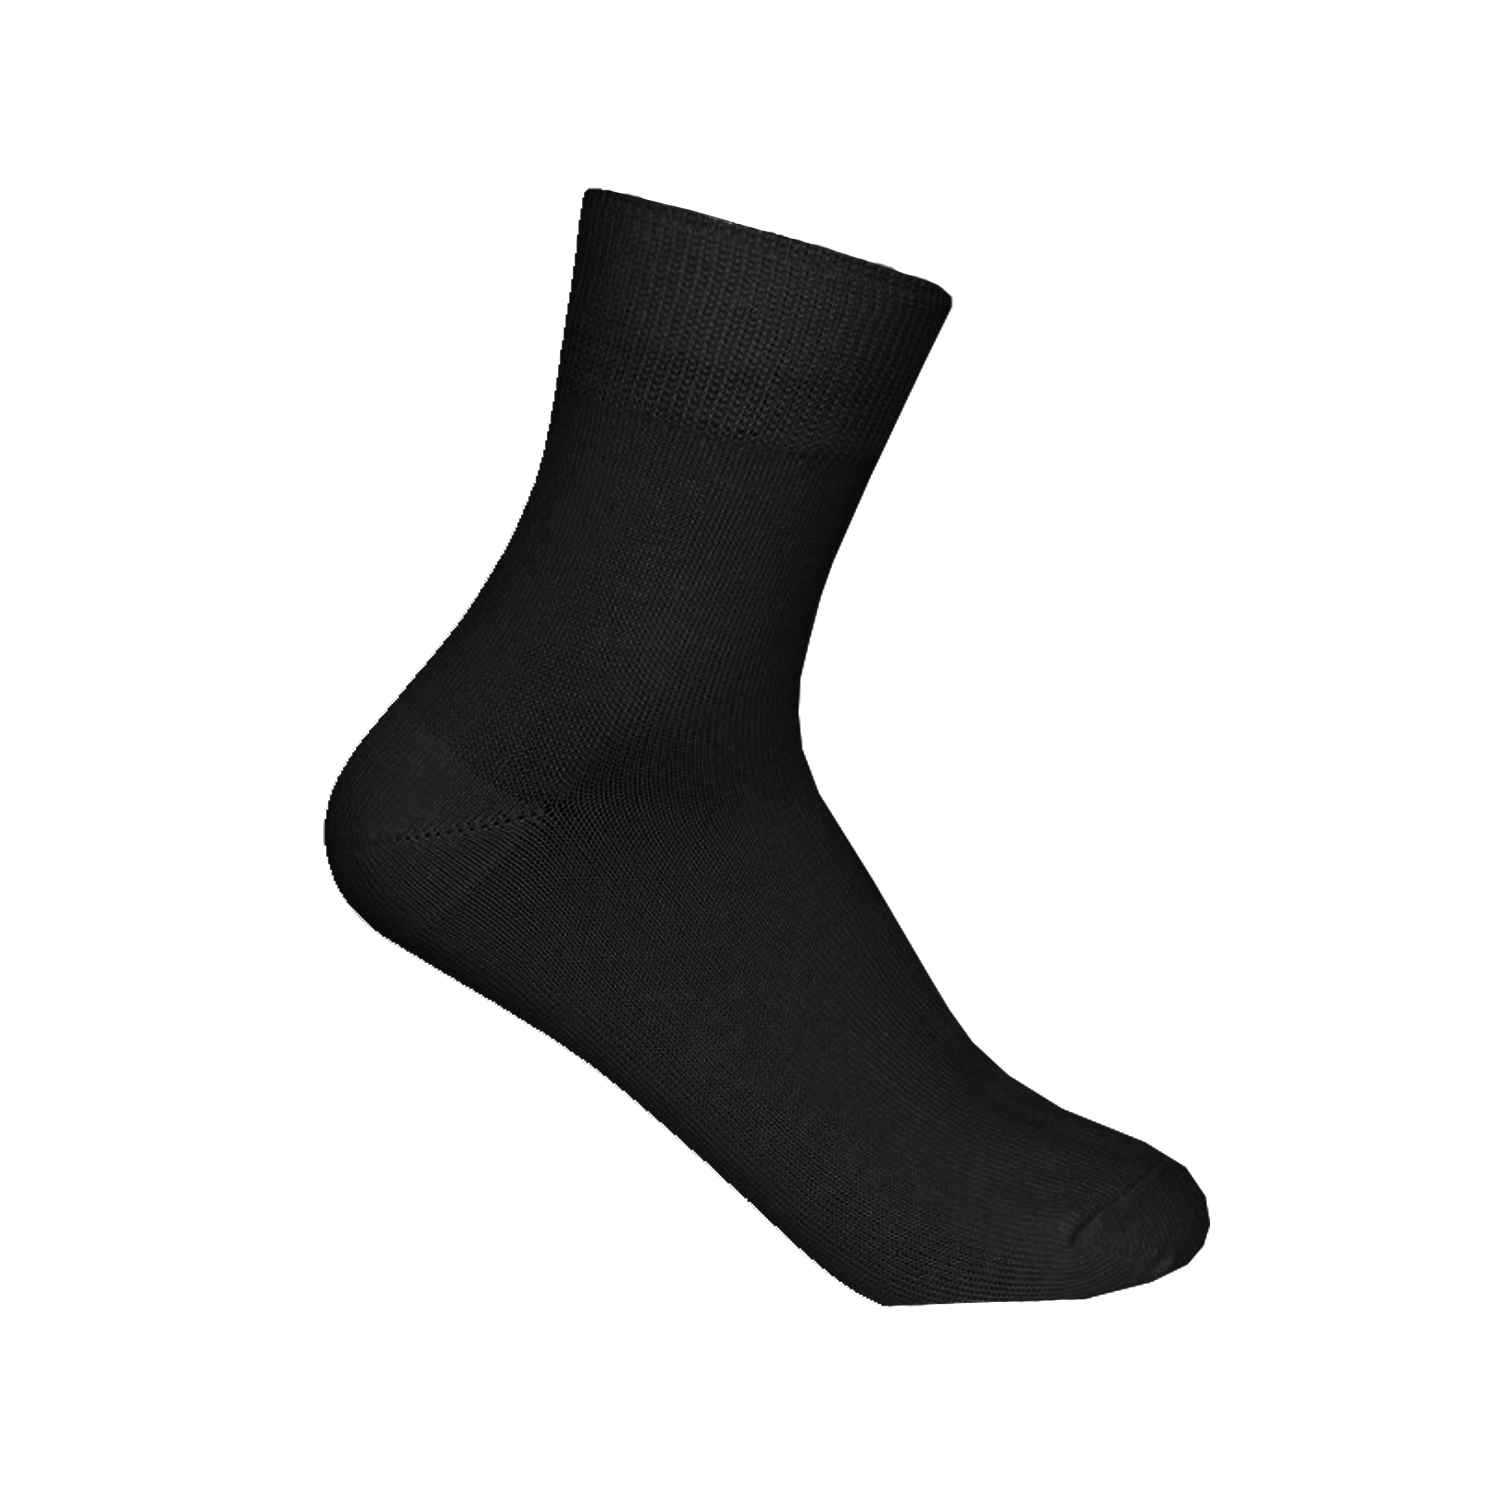 Black Unisex Ankle Socks (2 Pairs) - Quality Schoolwear